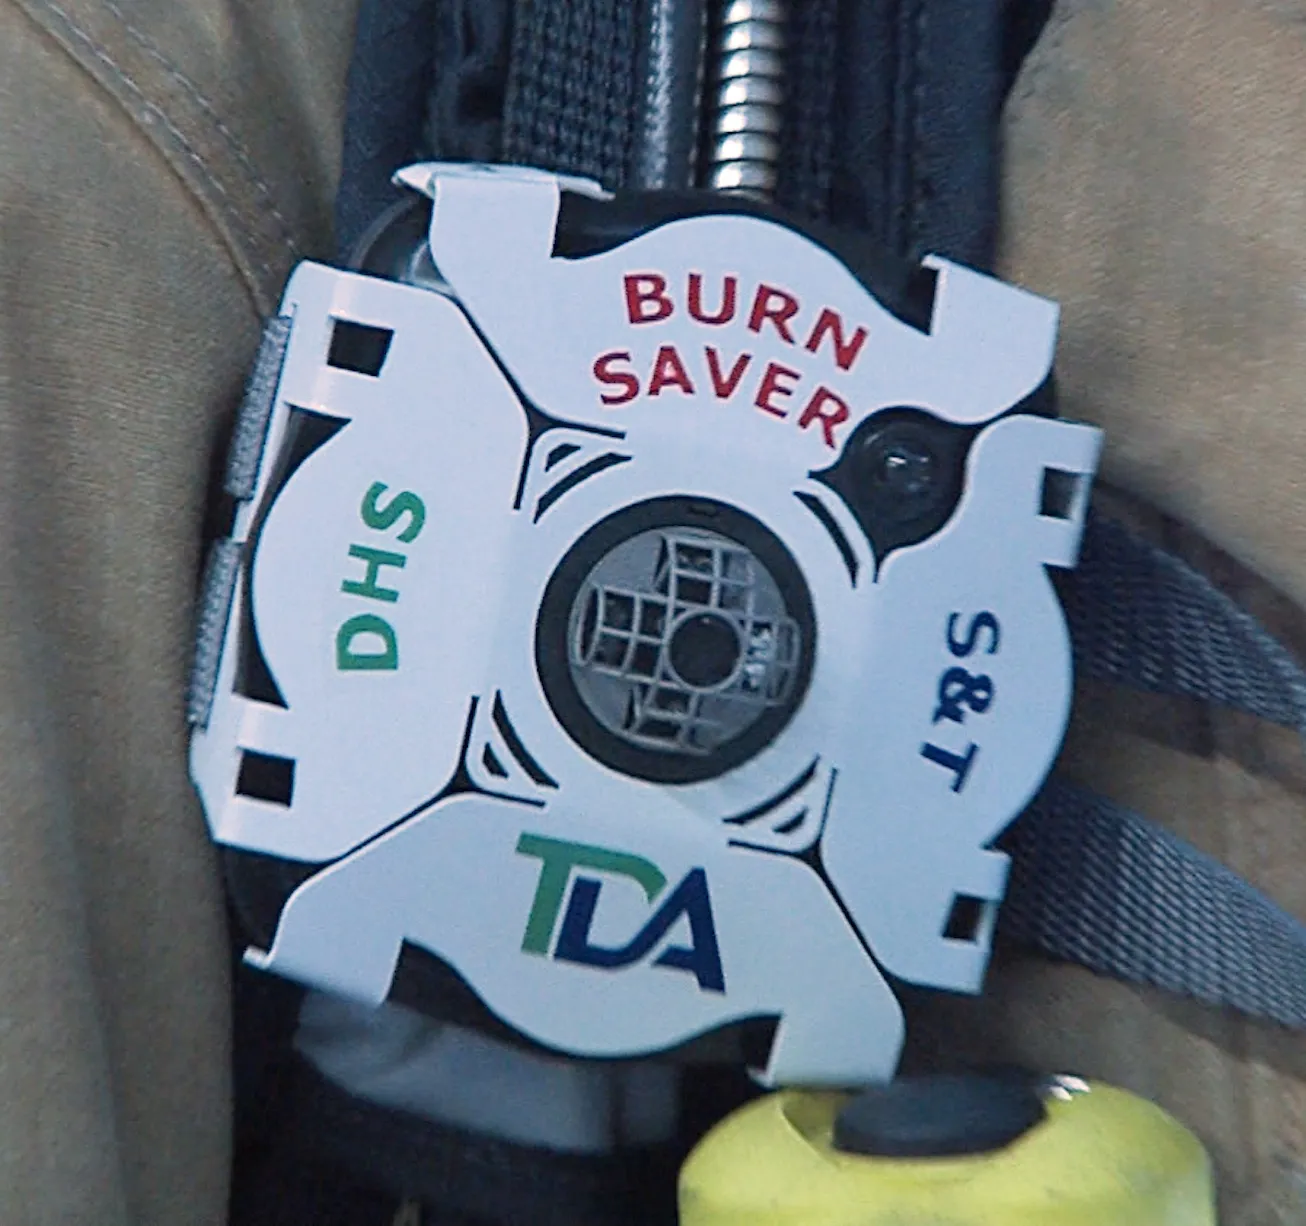 Burn Saver Device